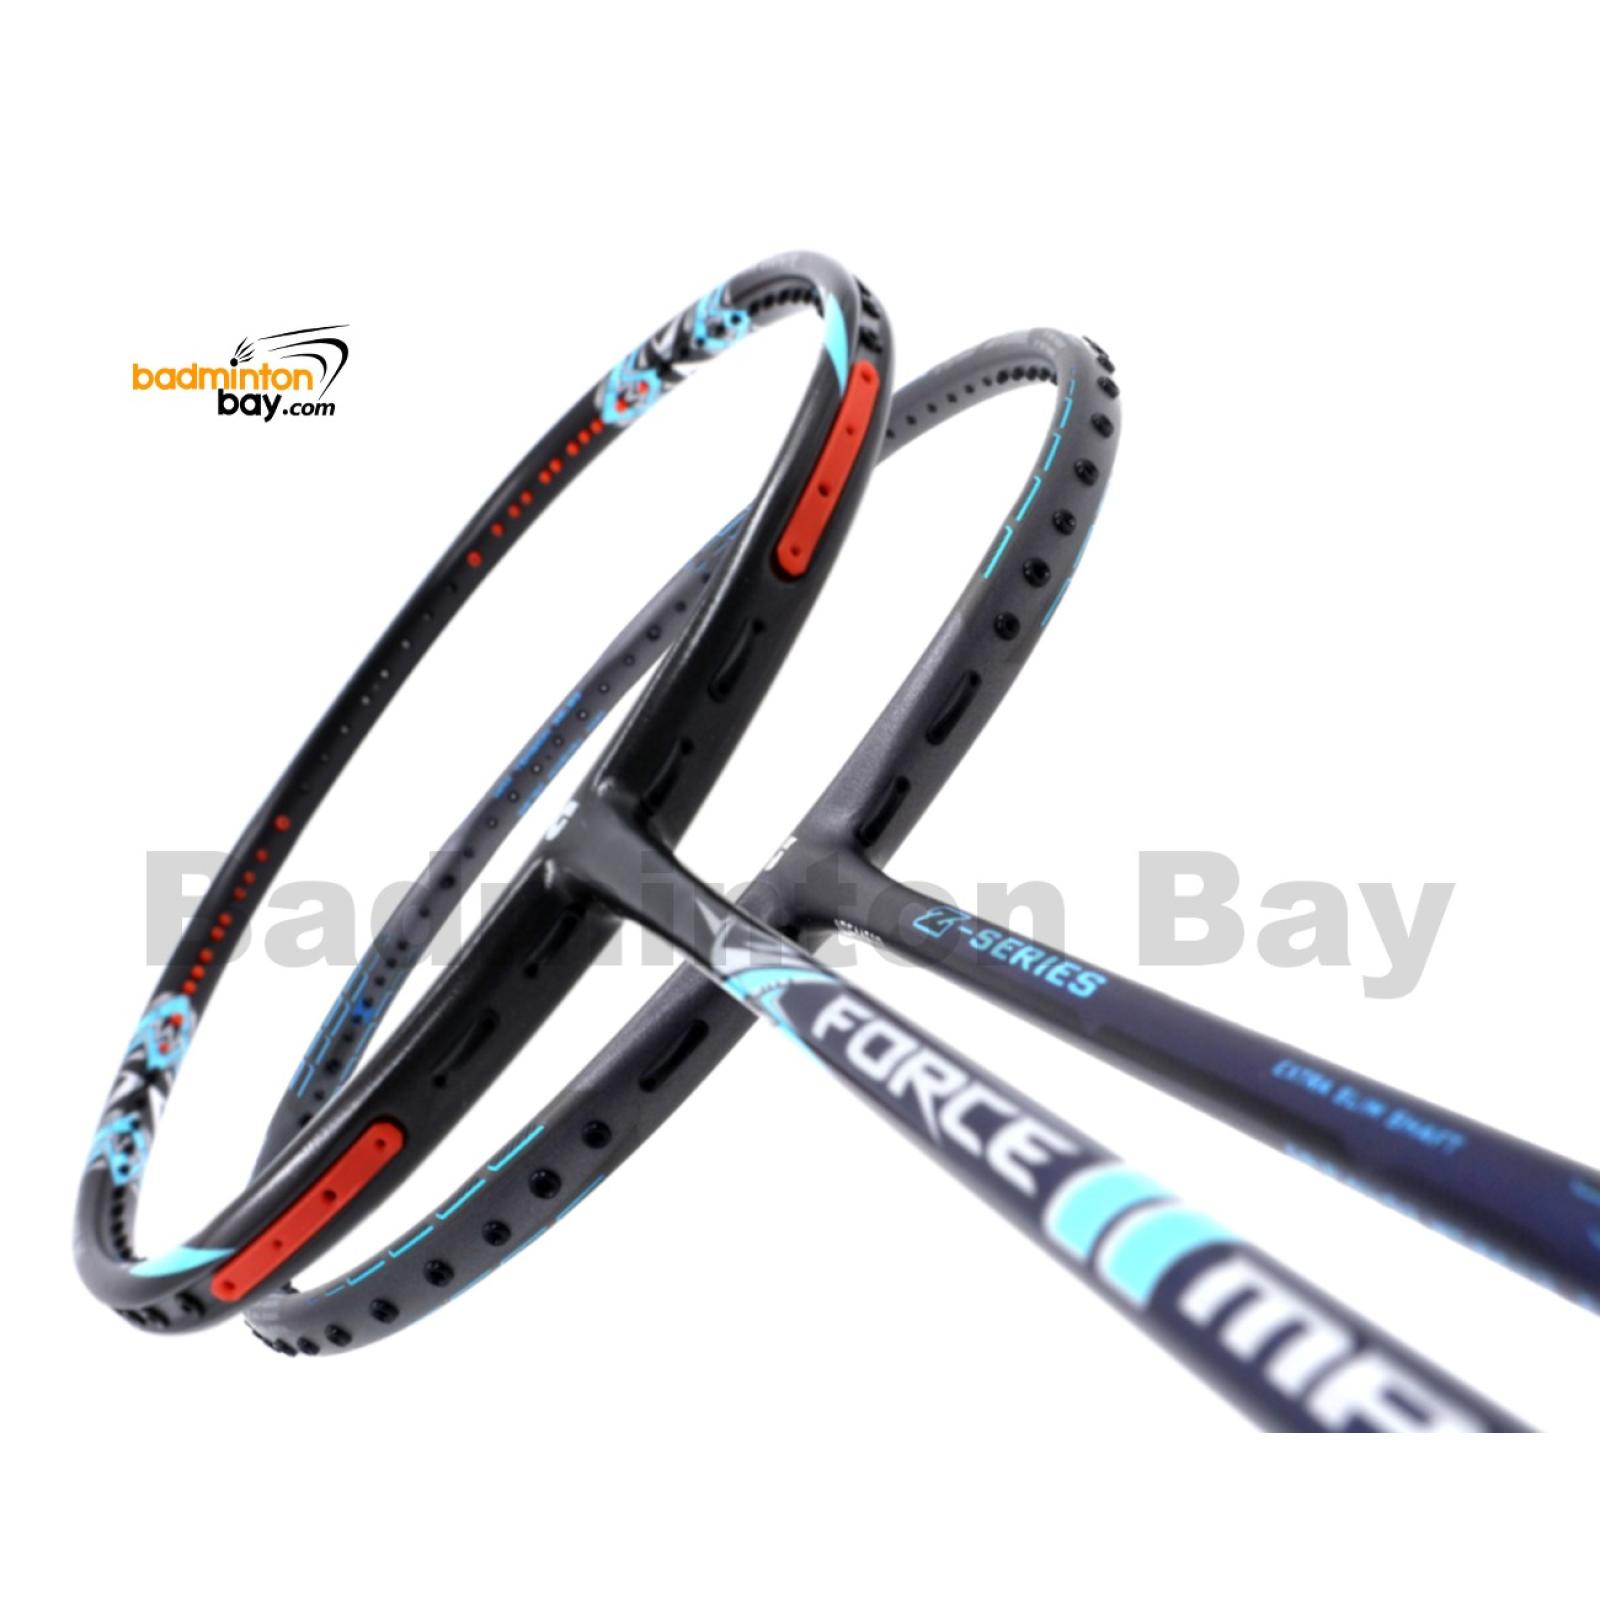 2 Pieces Deal Apacs Force II Max Dark Grey + Apacs Z Series Badminton Racket